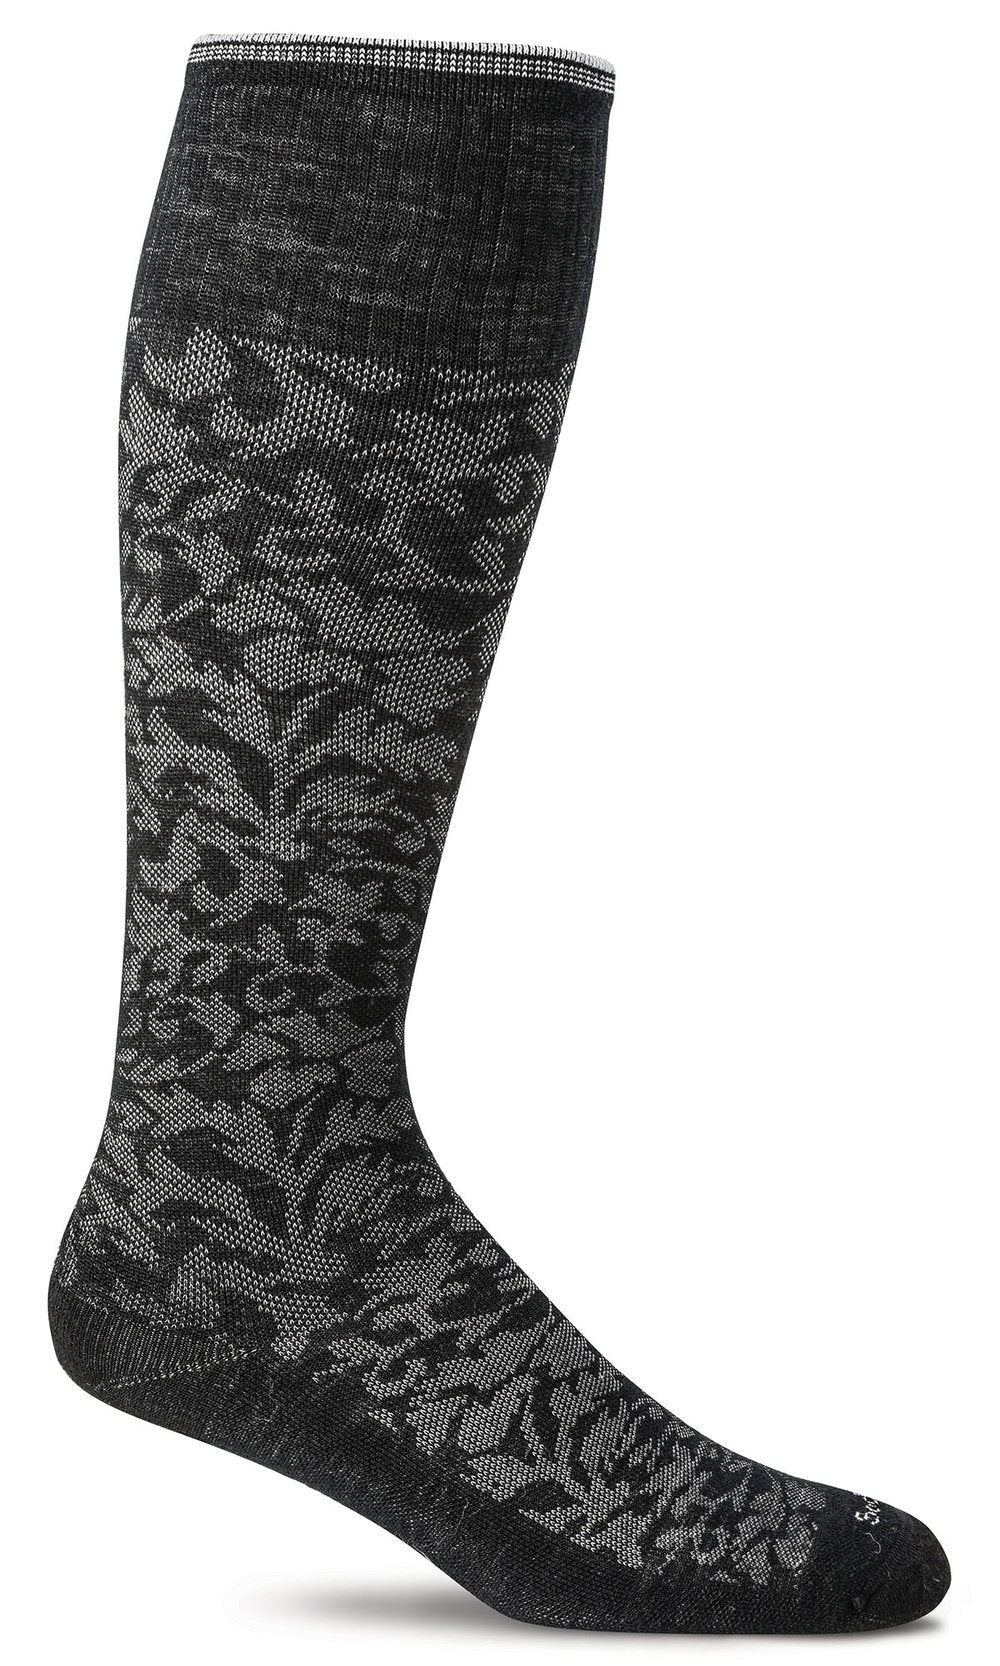 Sockwell Women's Moderate Compression Socks  Damask Black 